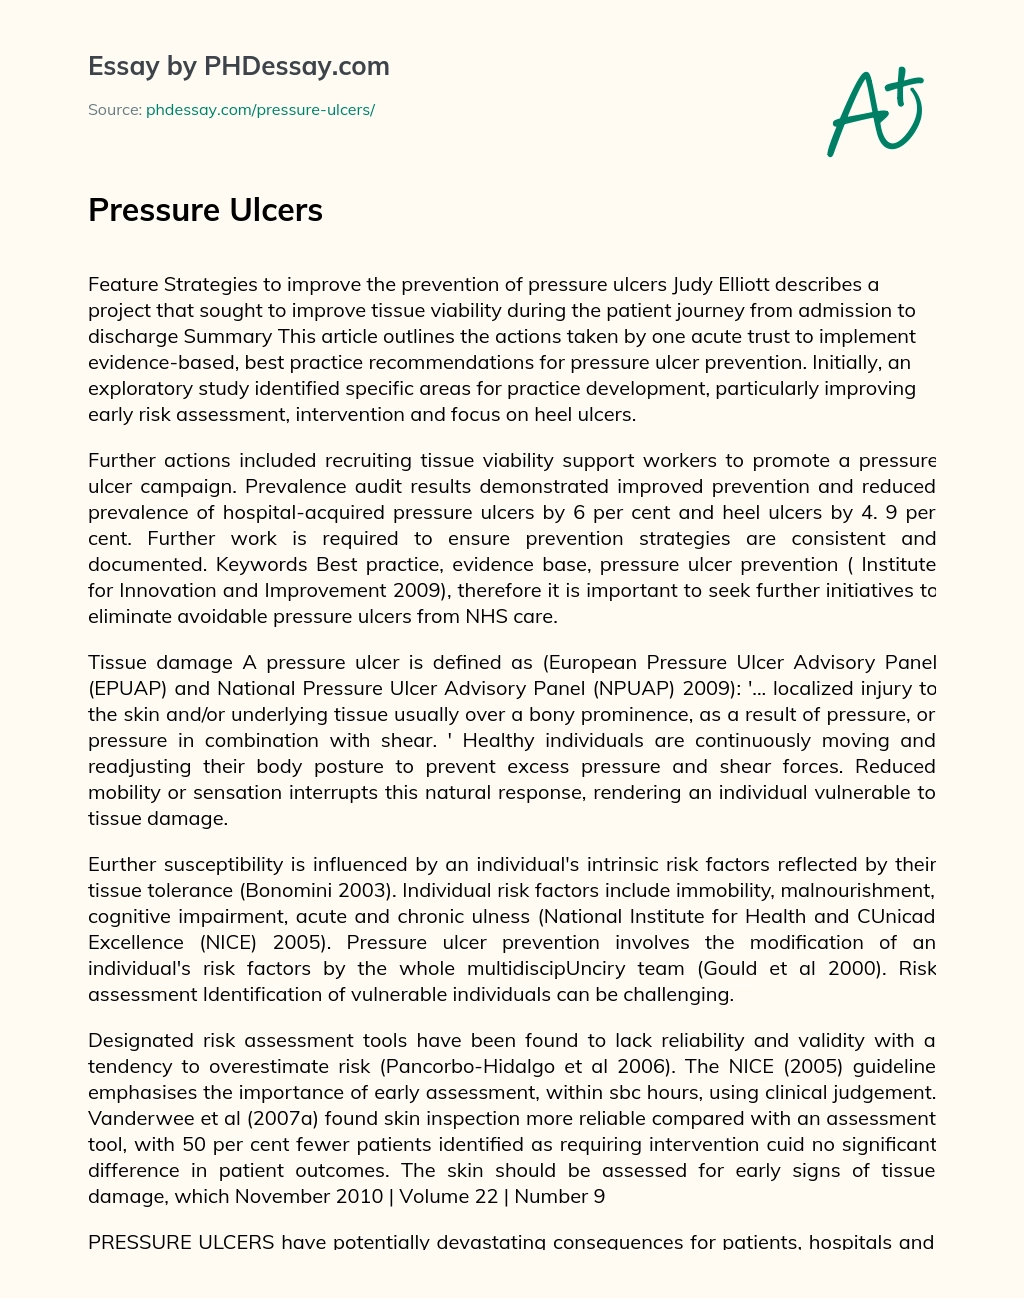 Pressure Ulcers essay